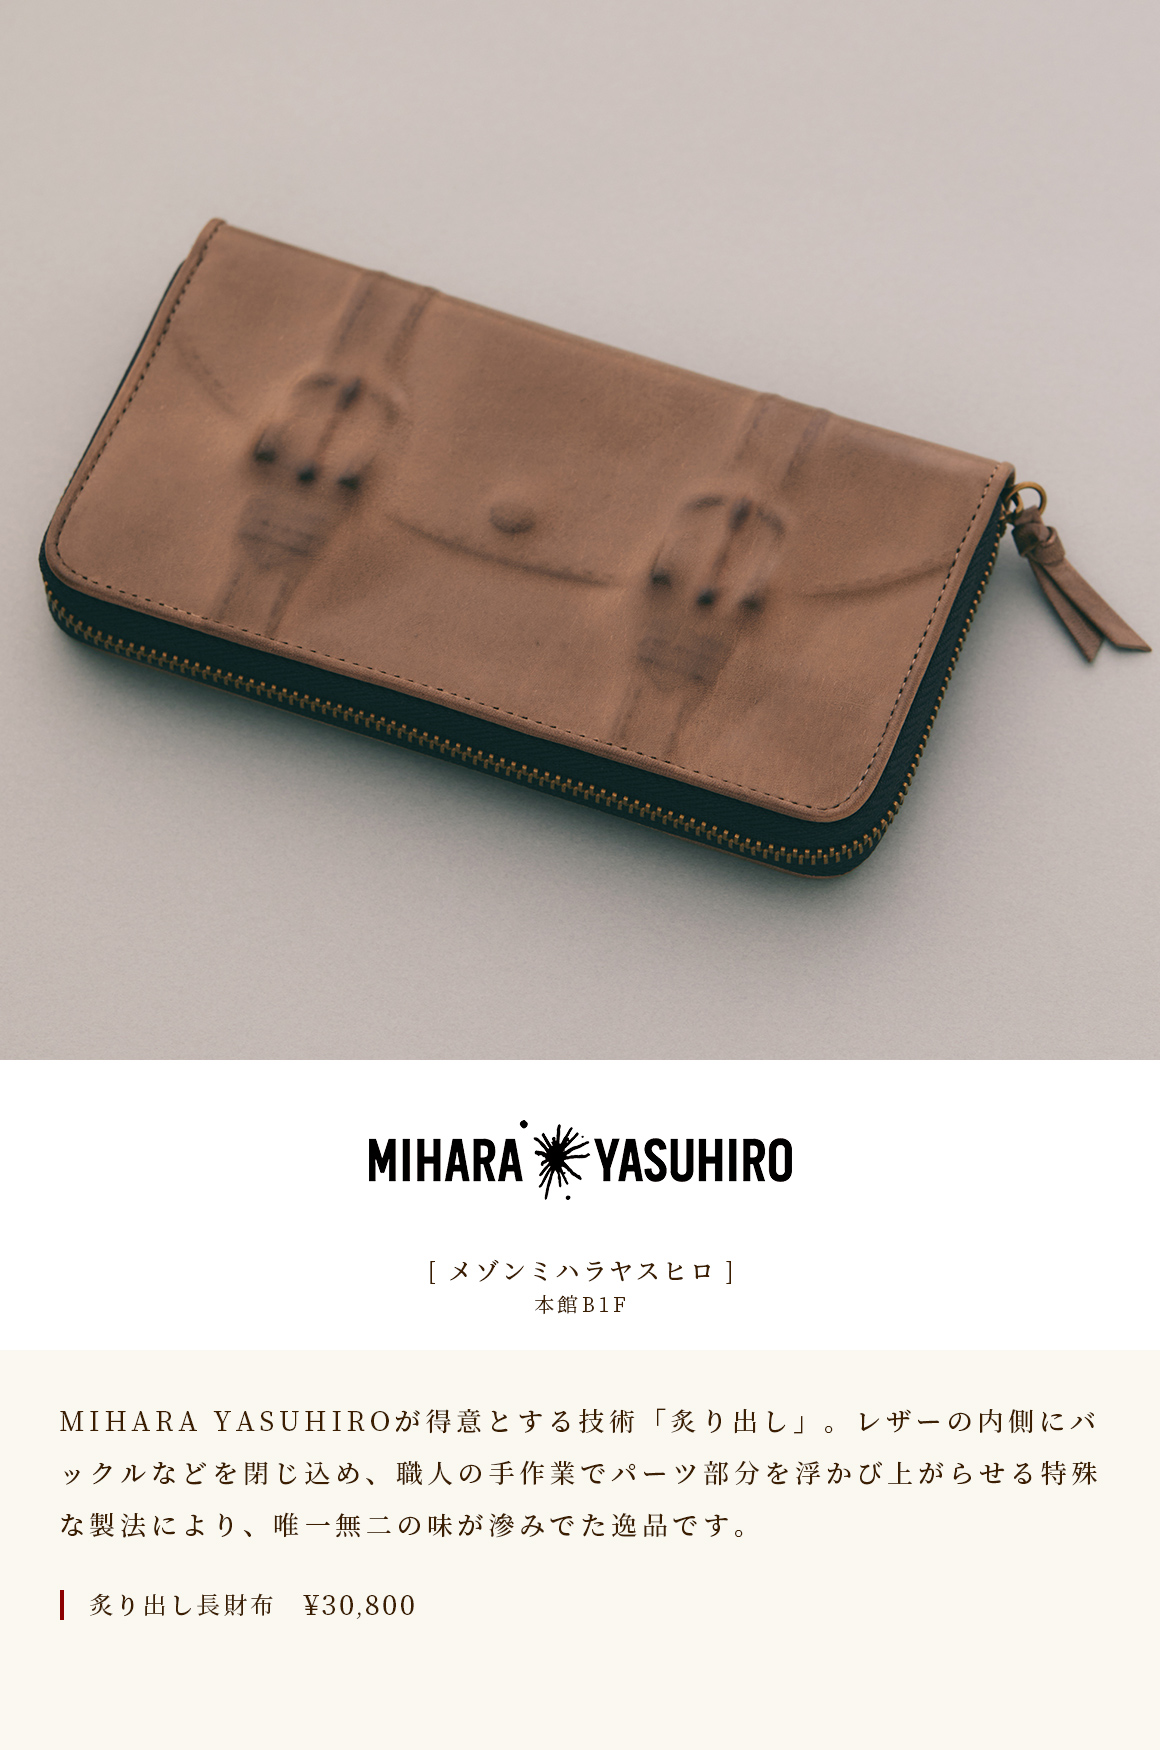 [Maison Mihara Yasuhiro] Main Building B1F MIHARA YASUHIRO的特色是“Aburidashi”。採用特殊的製造方法，將搭扣封閉在皮革內，並由工匠手工製作，使零件脫穎而出，是具有獨特品味的寶石。 Abridashi 錢包 ￥ 30,800